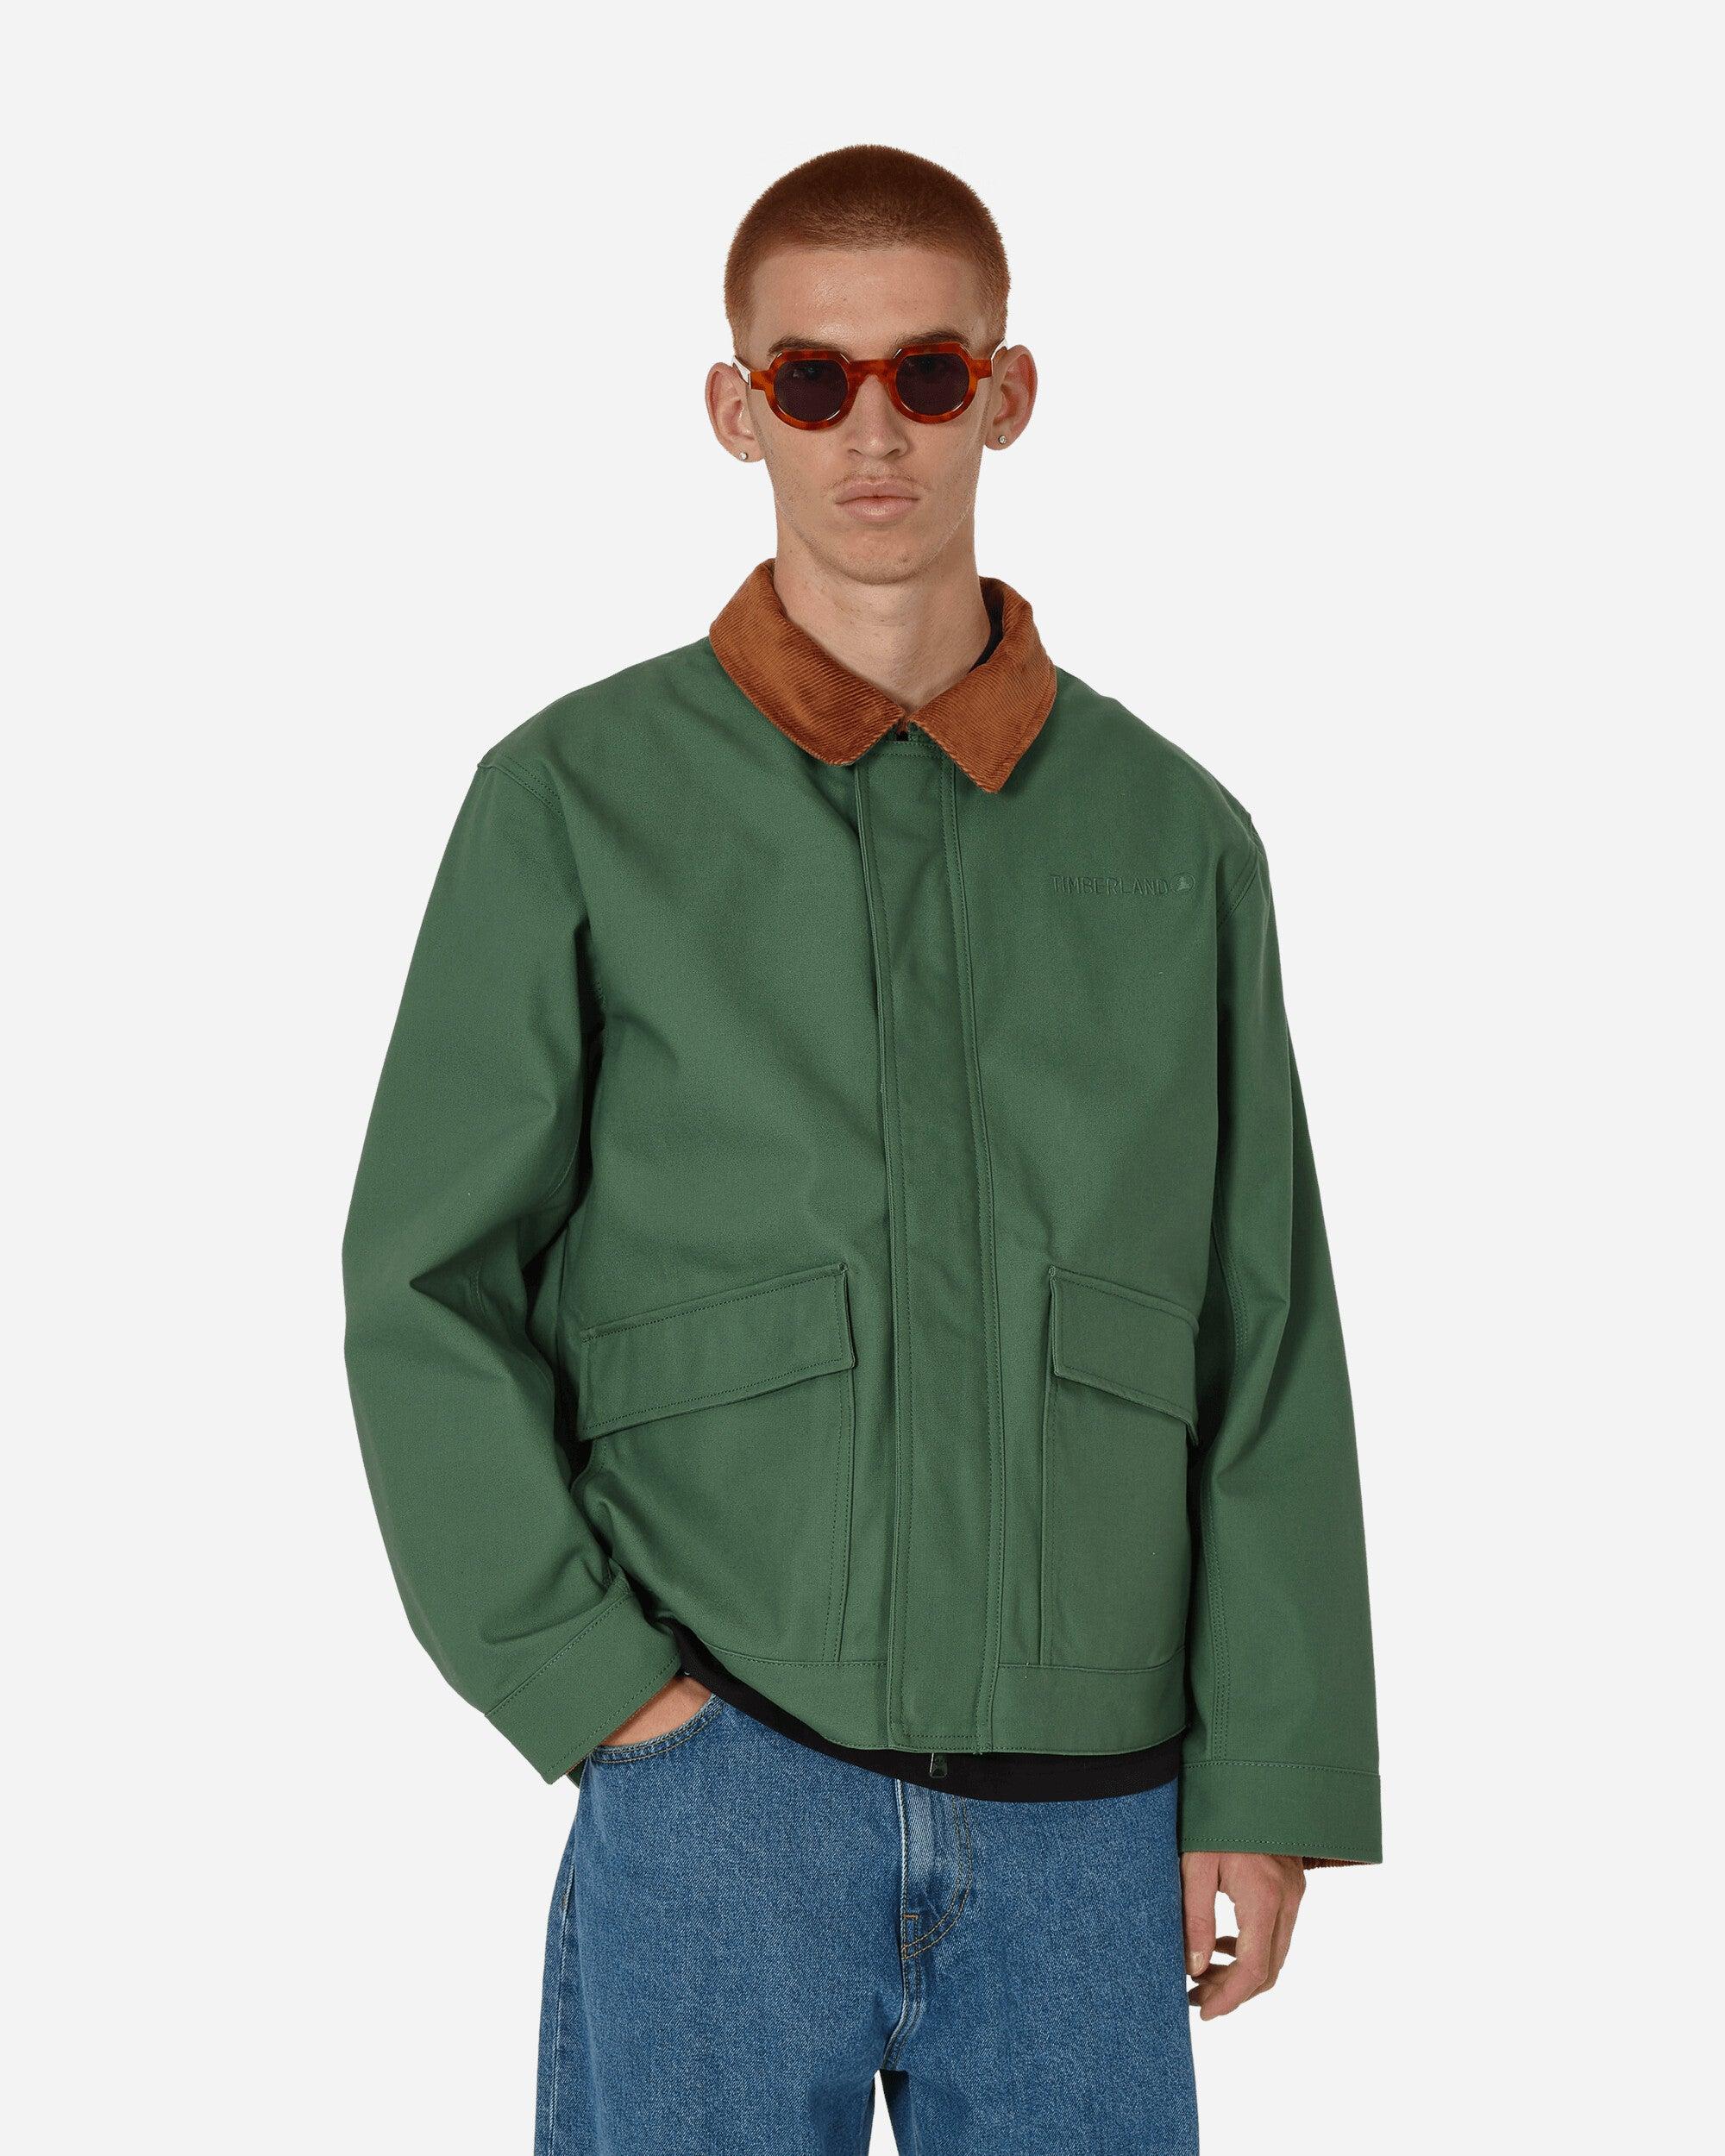 Timberland Nina Chanel Abney 3-in-1 Chore Jacket Medium in Green for Men